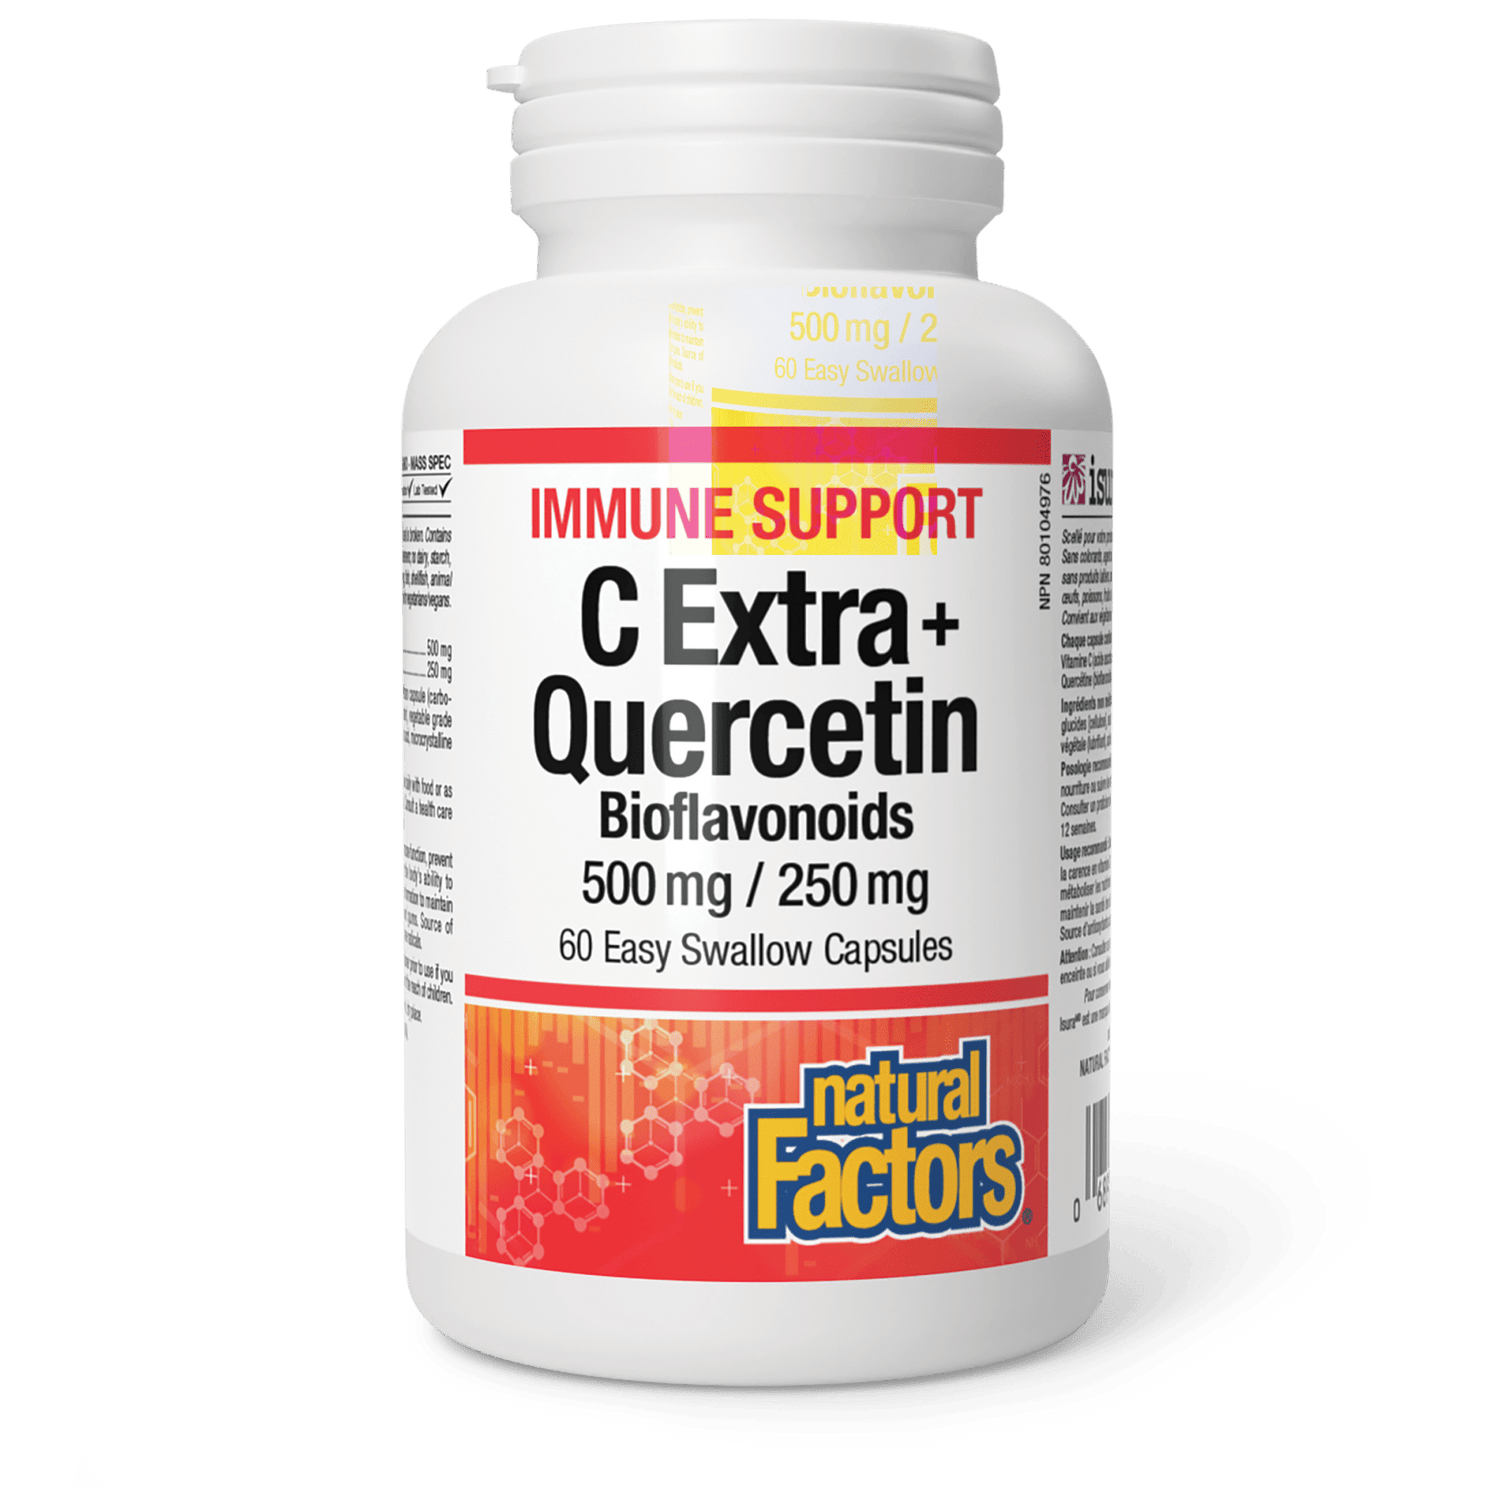 C Extra + Quercetin Bioflavonoids 500 mg/250 mg, Natural Factors|v|image|1398